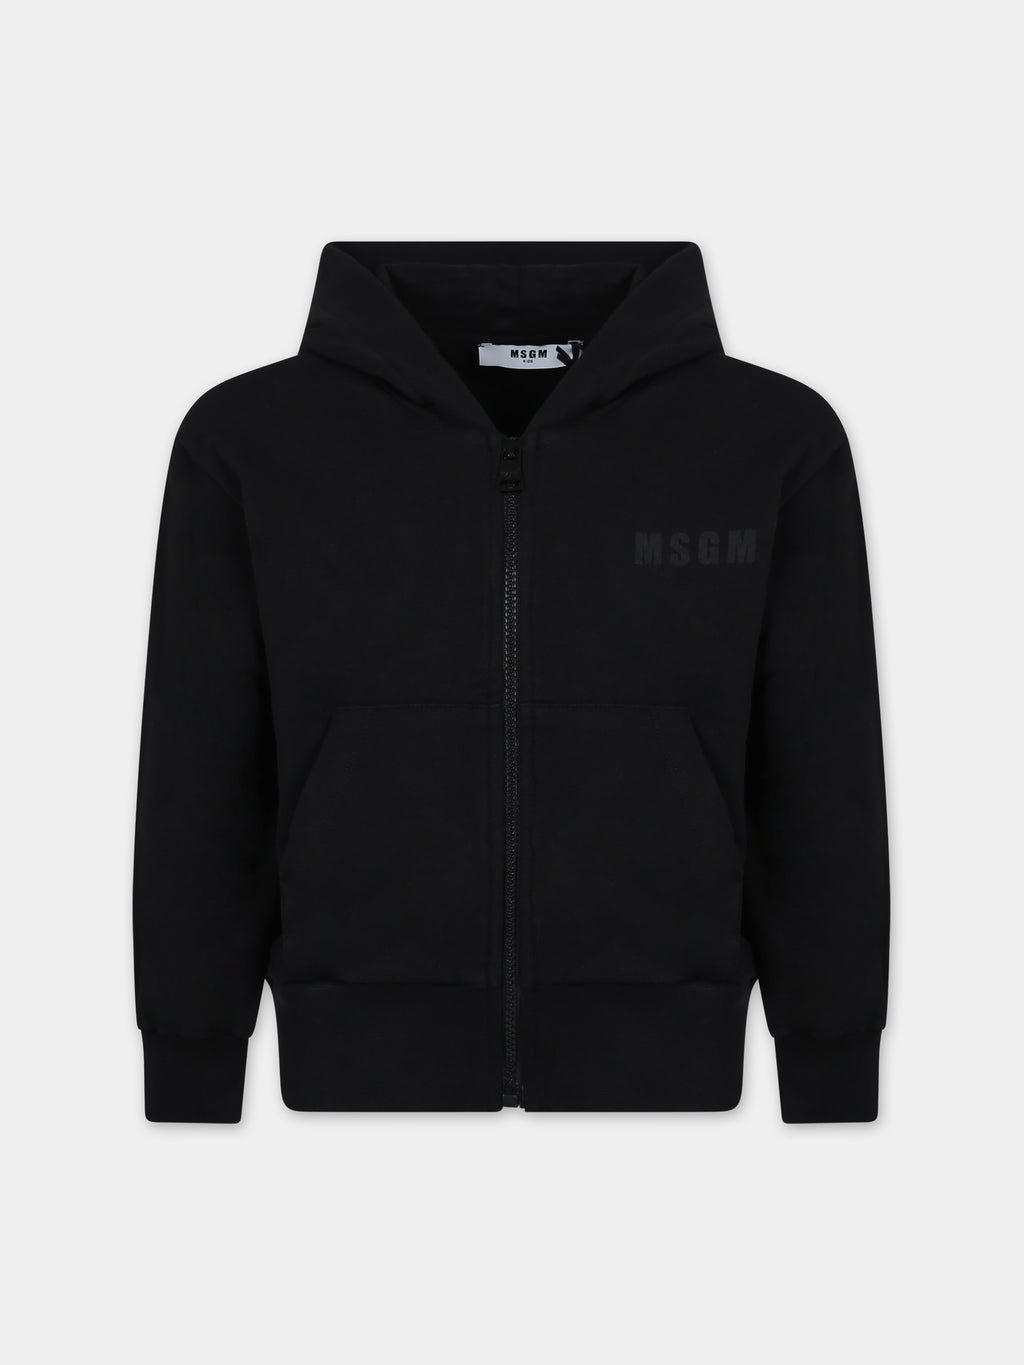 Black sweatshirt for kids with logo